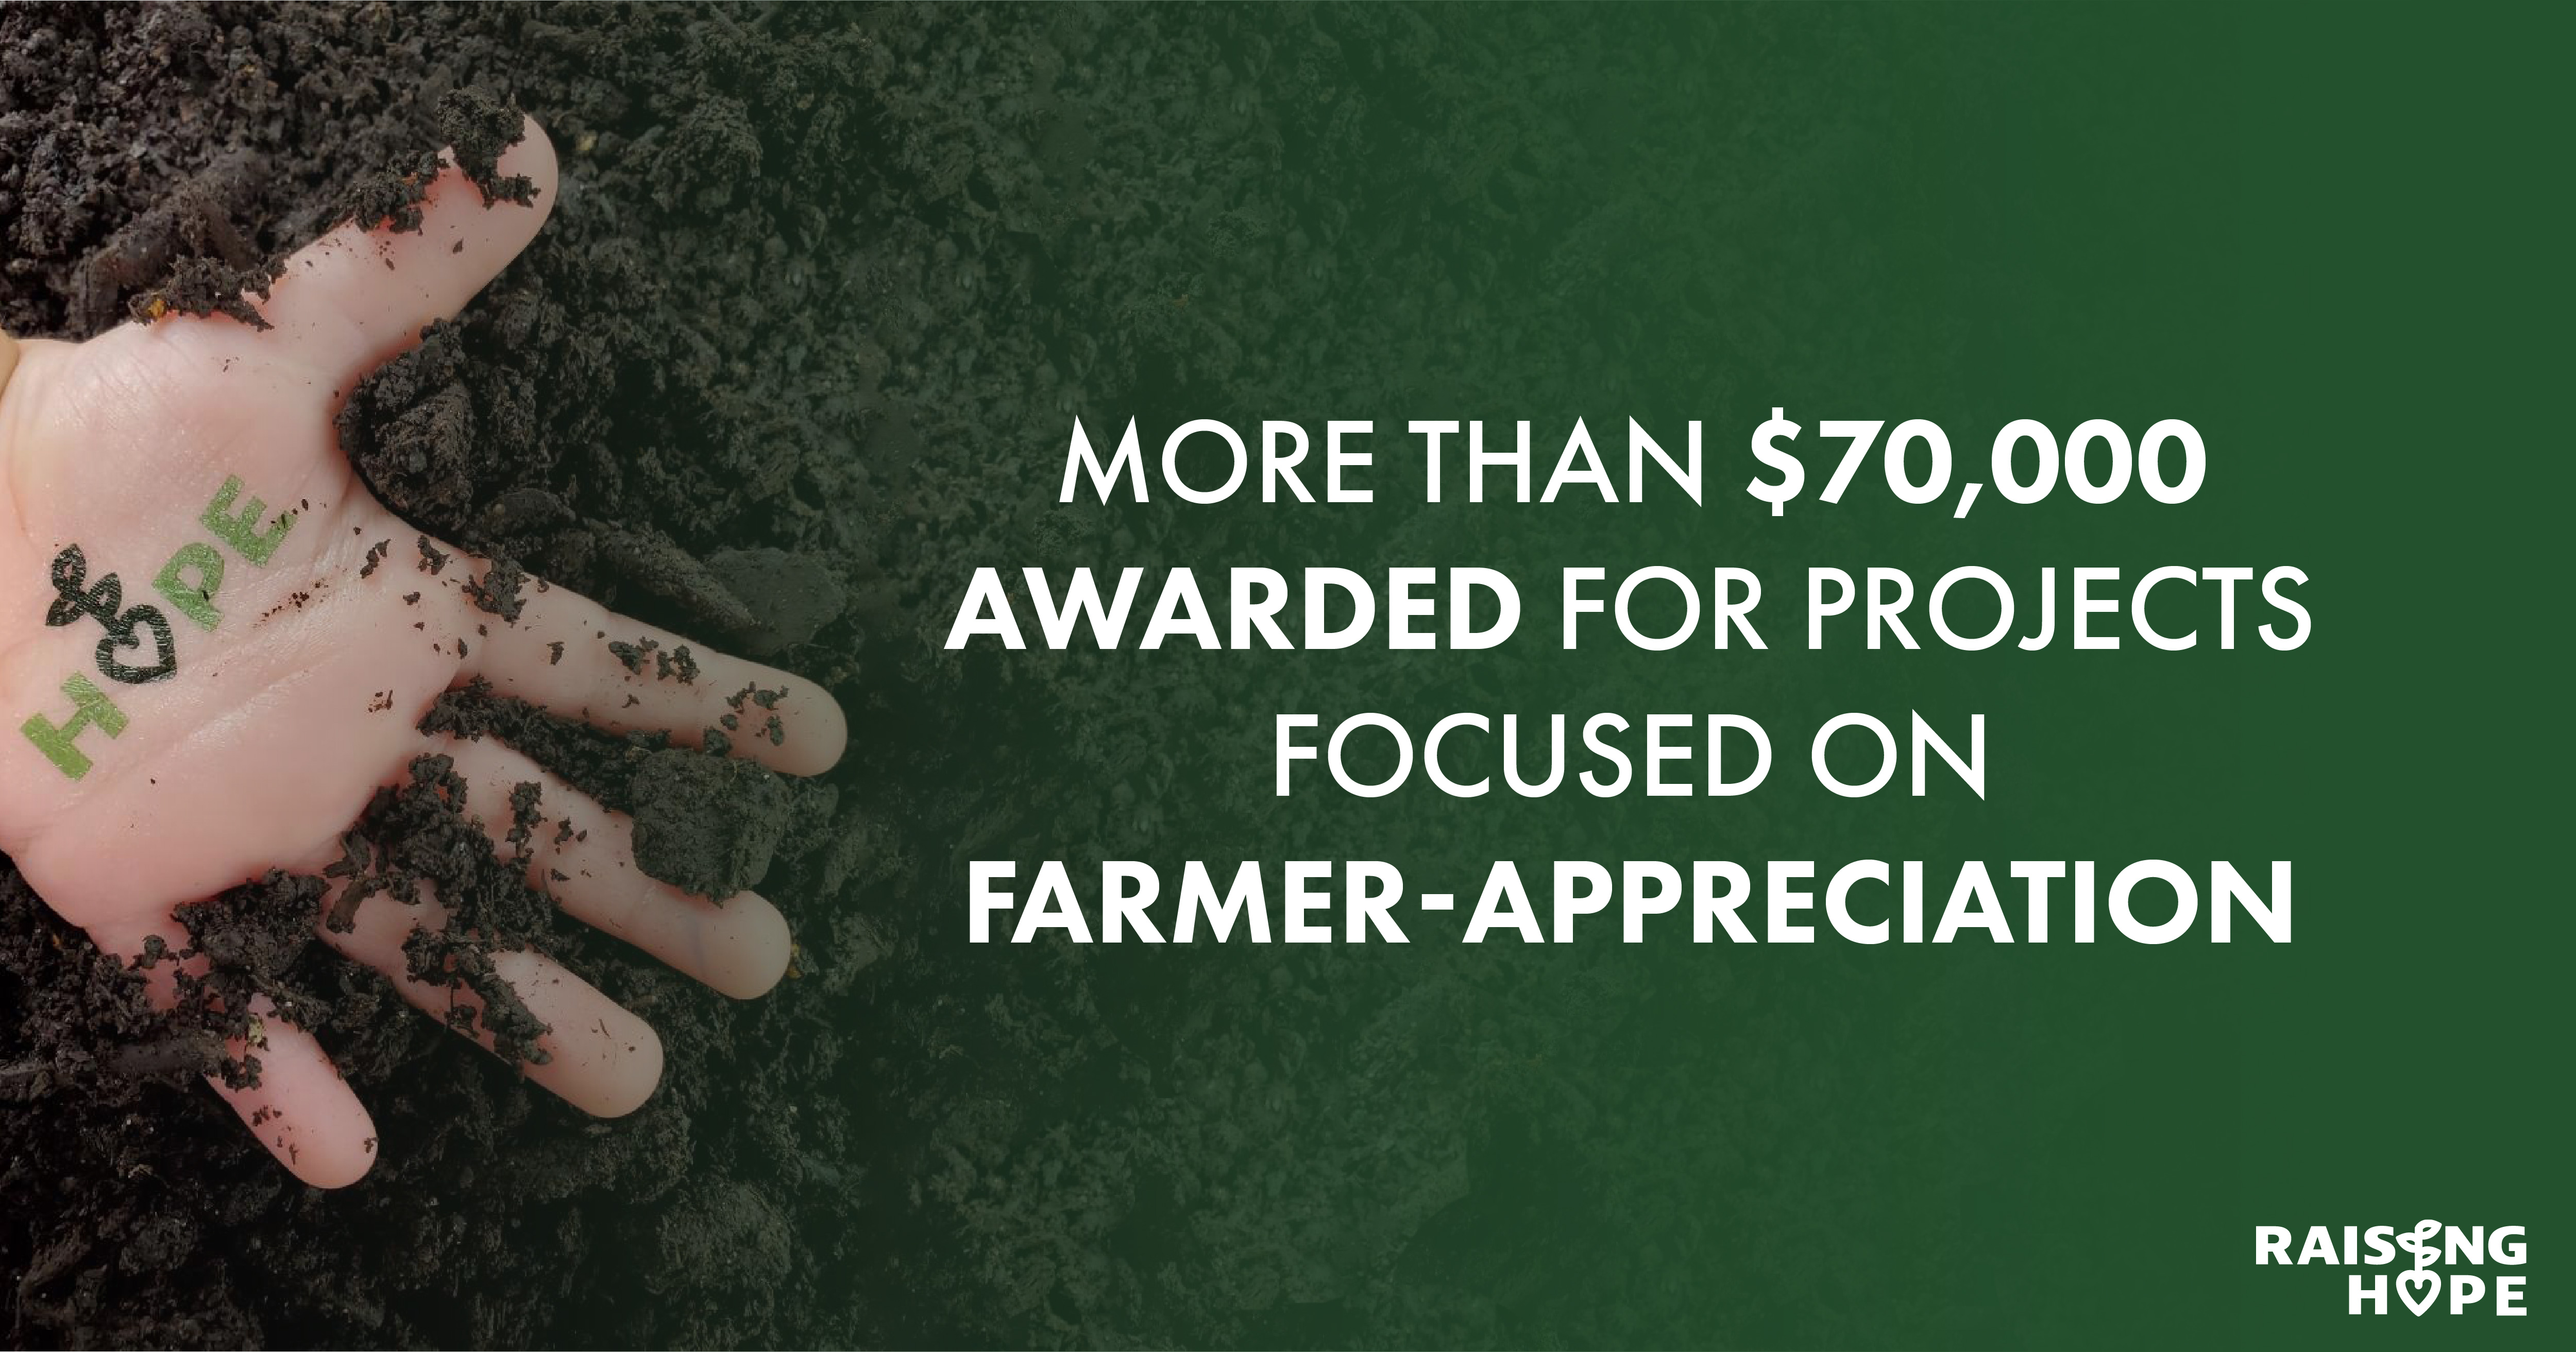 Farmer appreciation grants